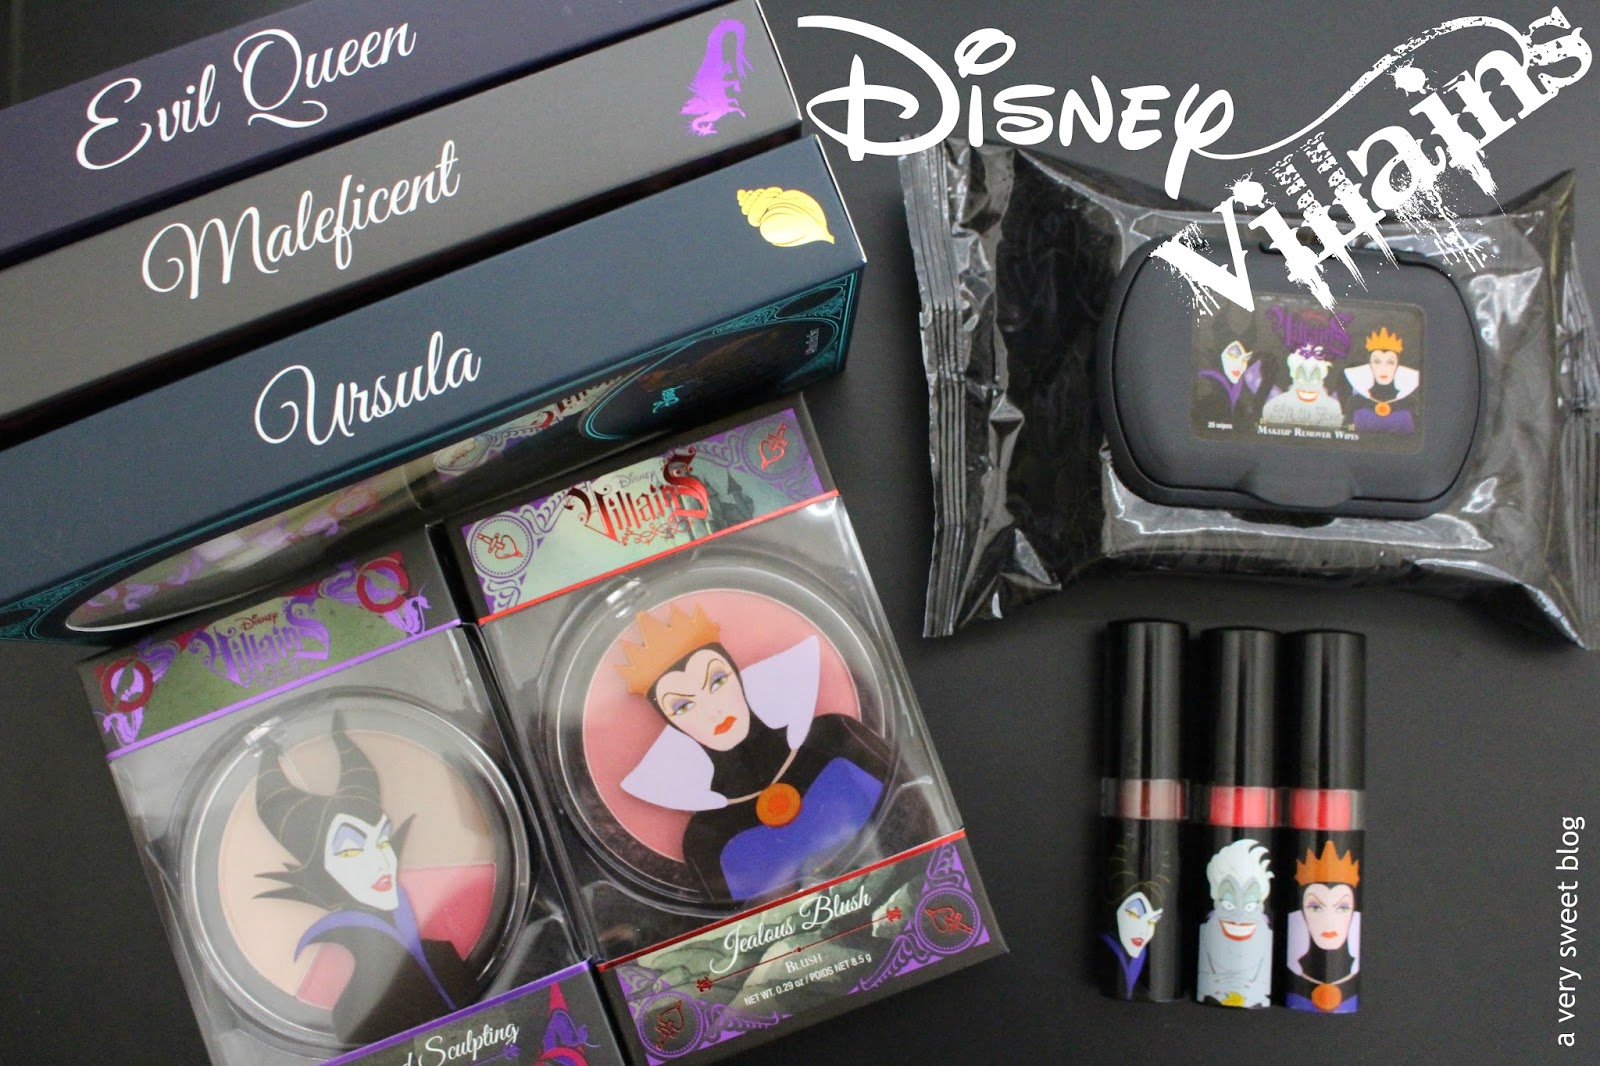 Disney Villains Makeup Collection Review | A Very Sweet Blog